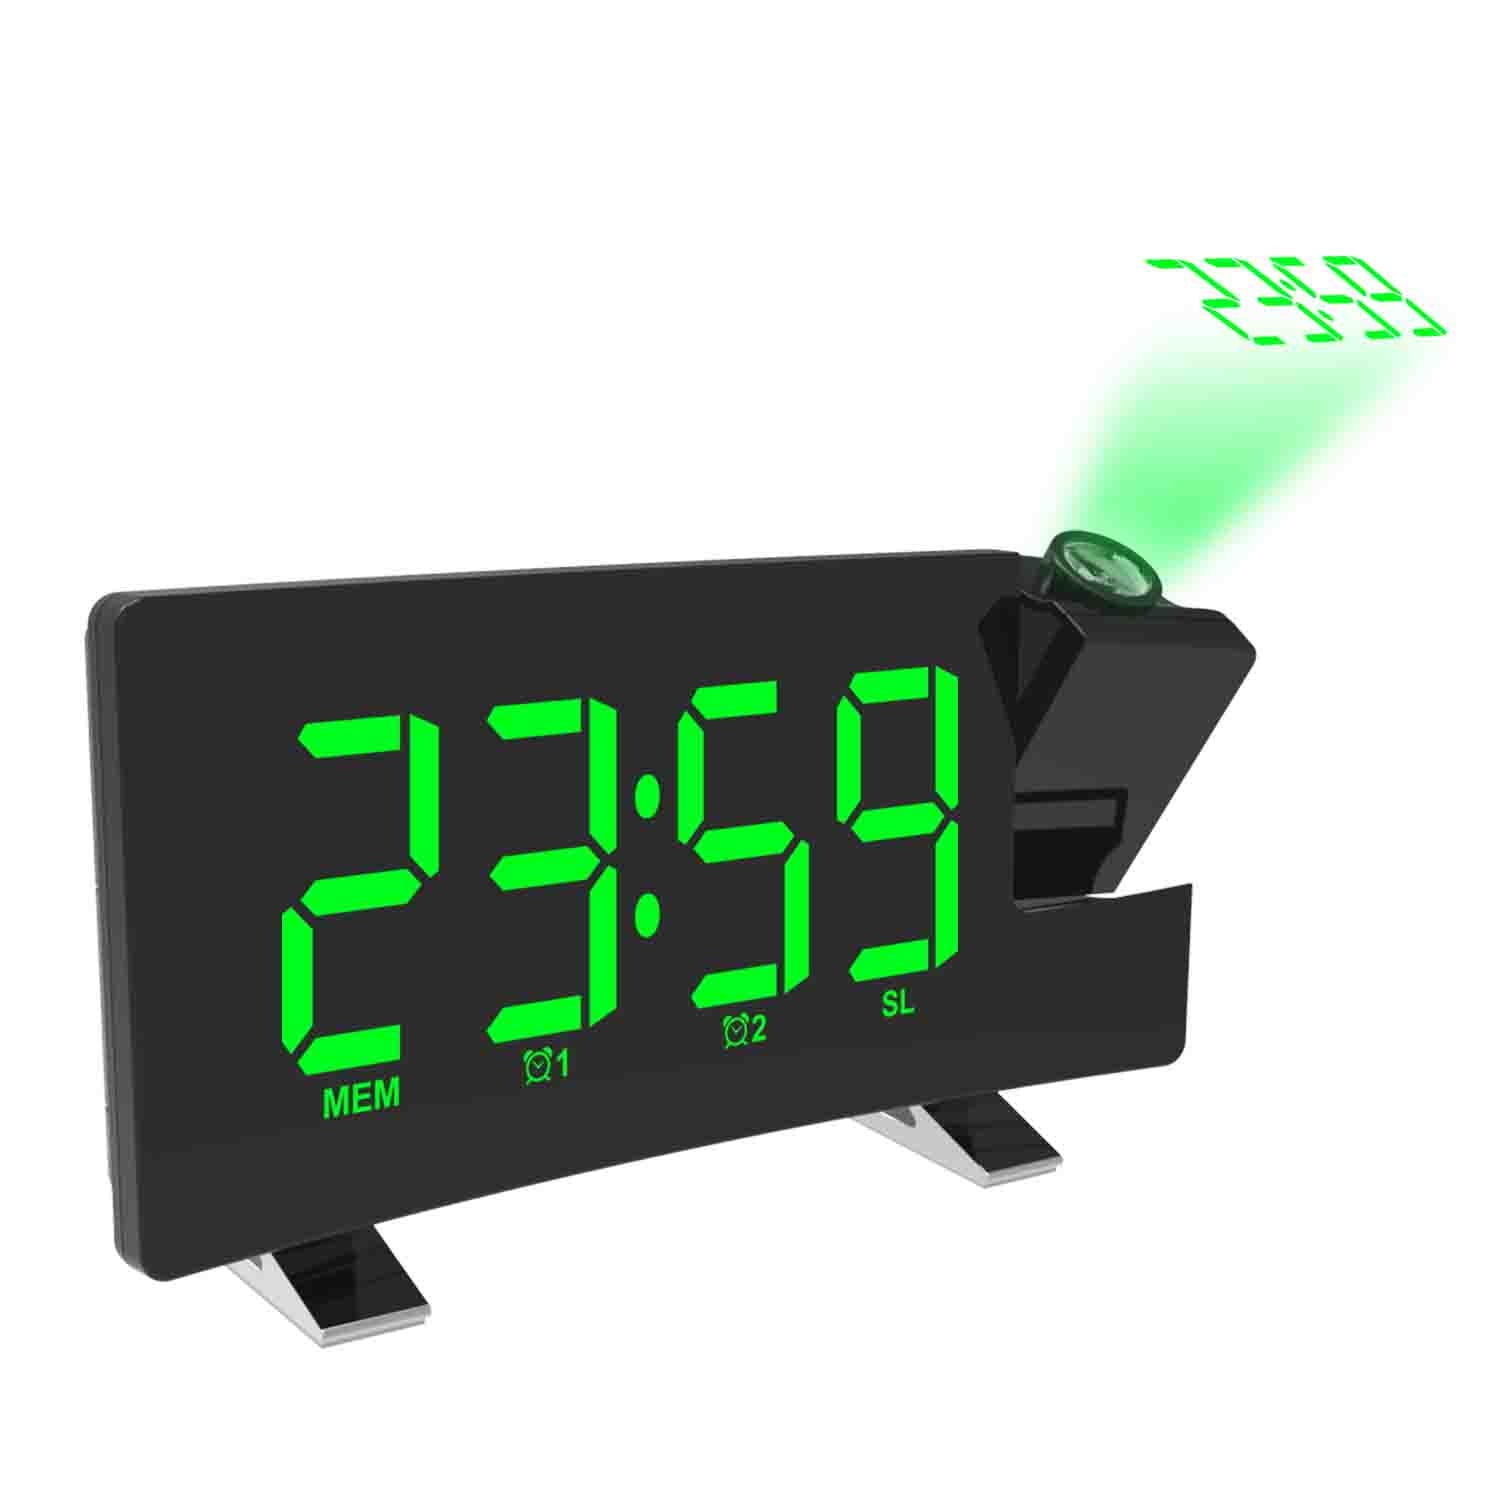 Westclox Tech 47547 Super Loud Alarm Clock ,90dB - Walmart.com